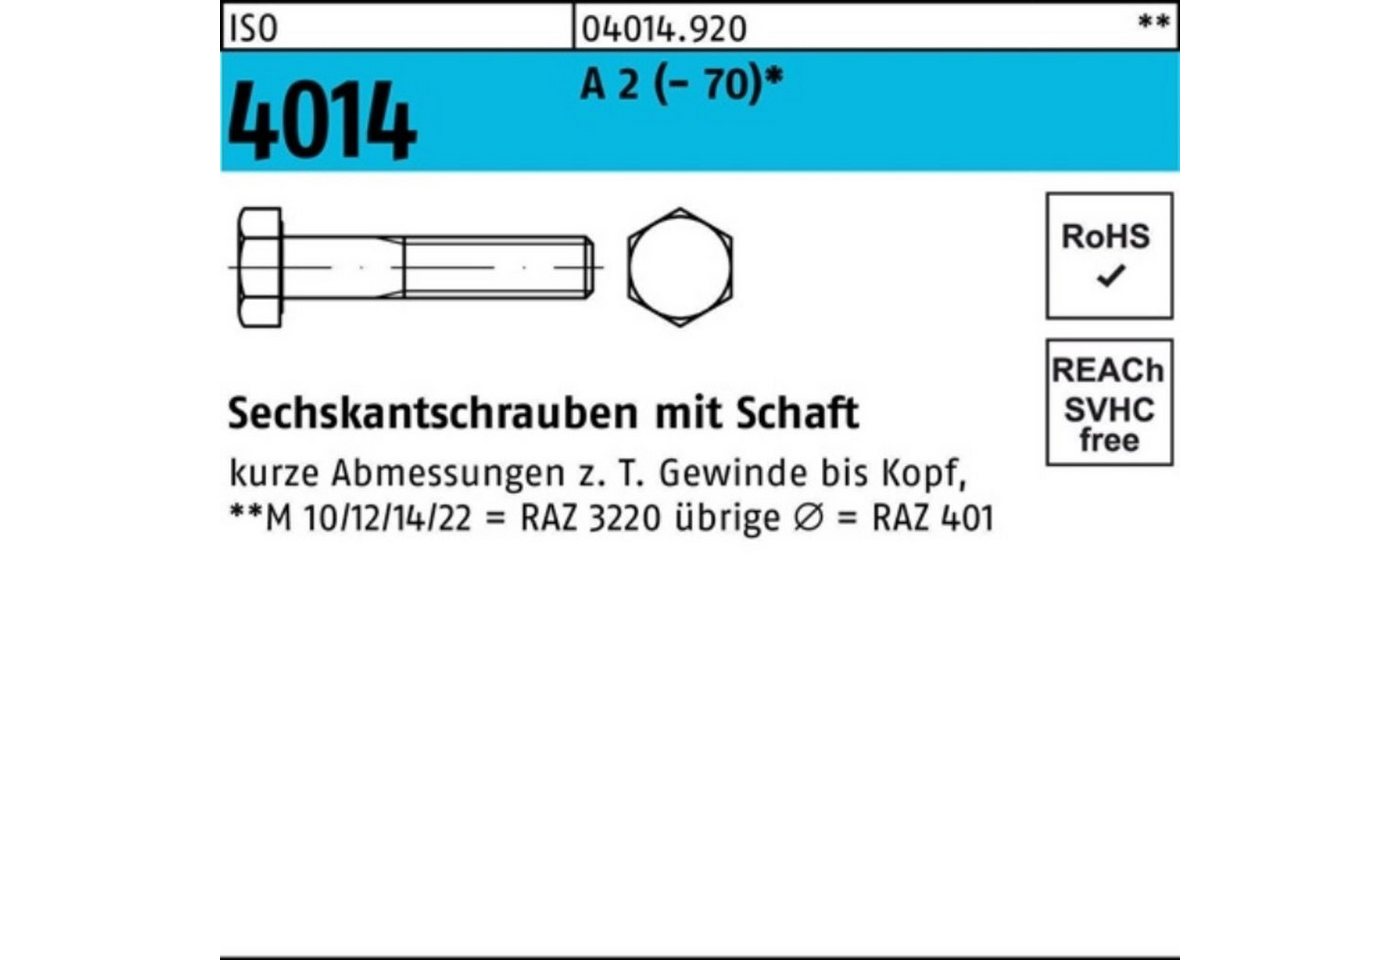 Bufab Sechskantschraube 100er Pack Sechskantschraube ISO 4014 Schaft M10x 140 A 2 (70) 50 St von Bufab